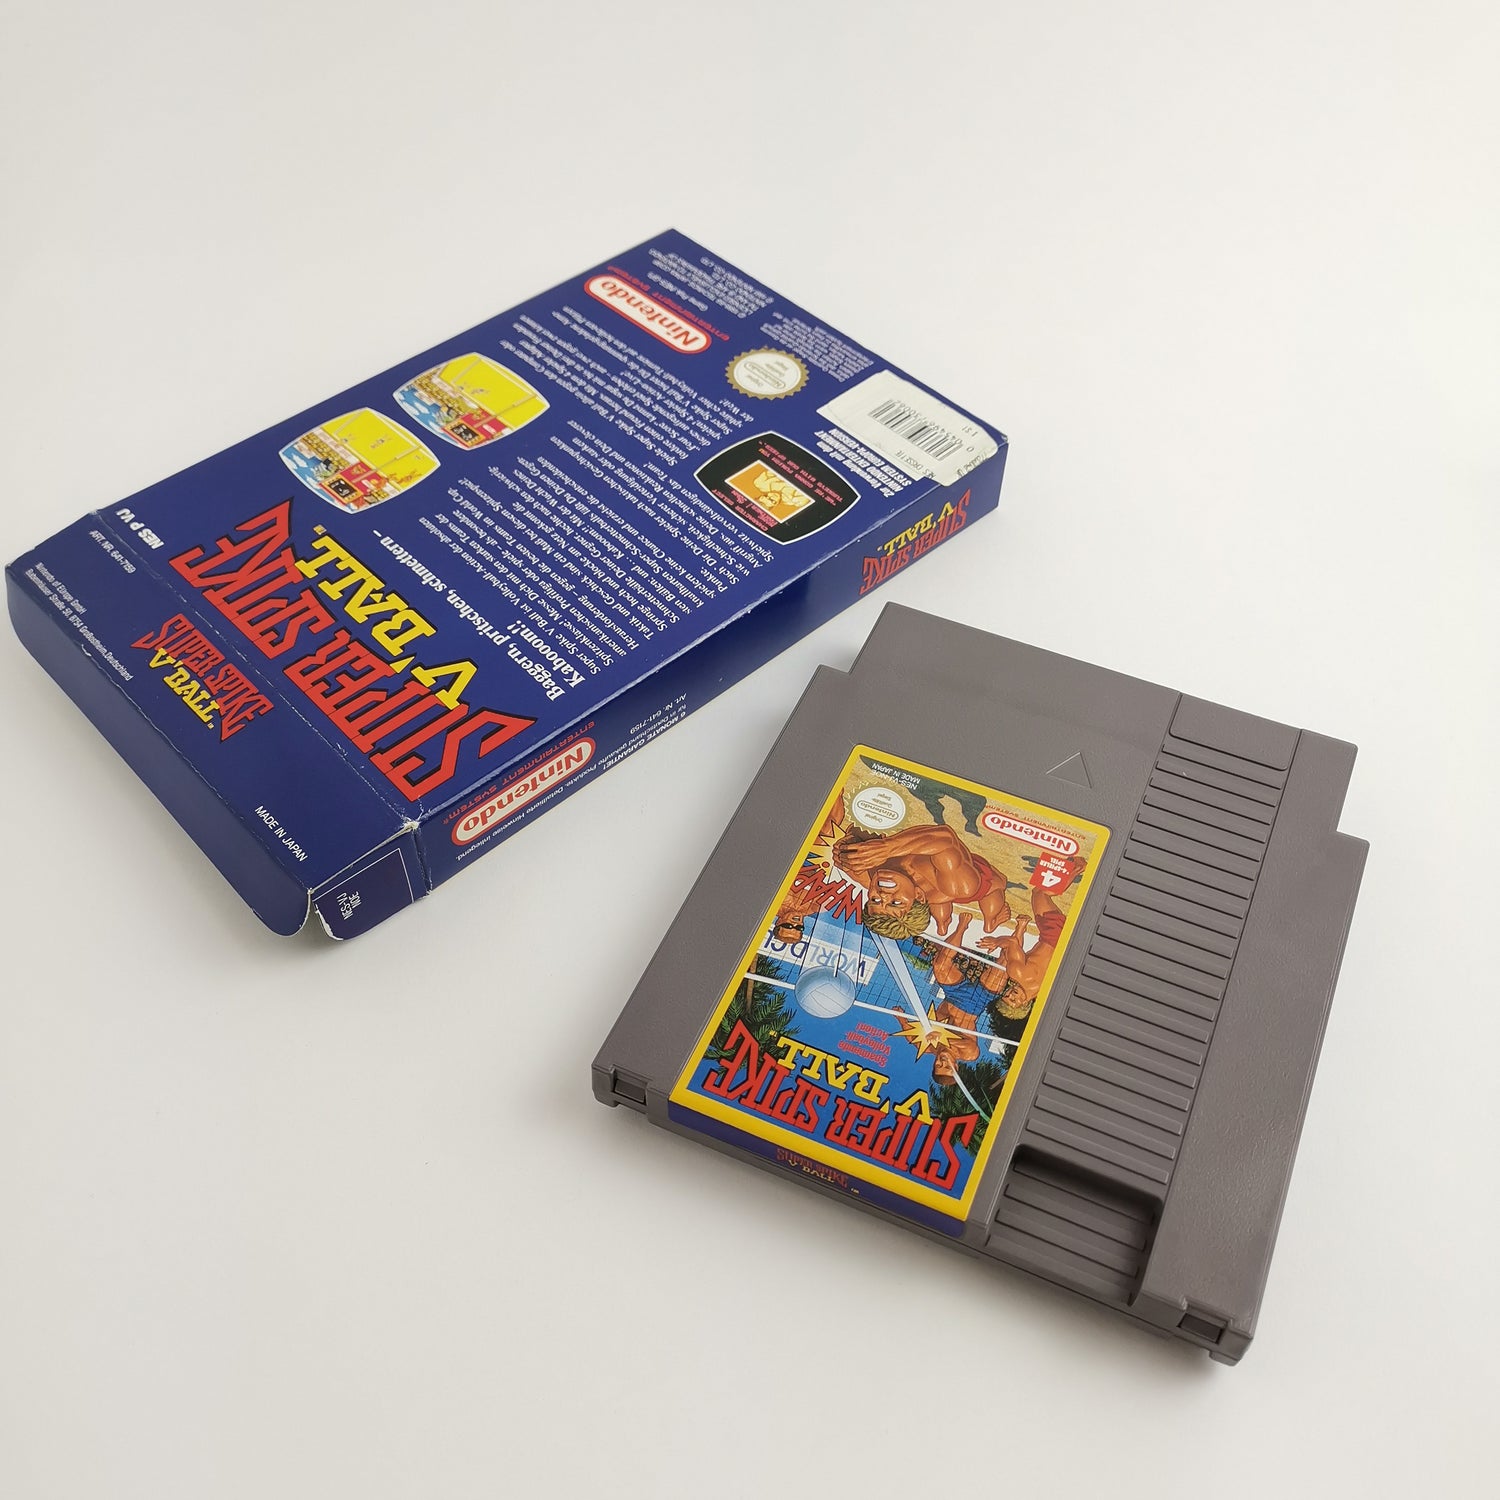 Nintendo Entertainment System Spiel : Super Spike V´Ball OVP ohne Anleitung NES